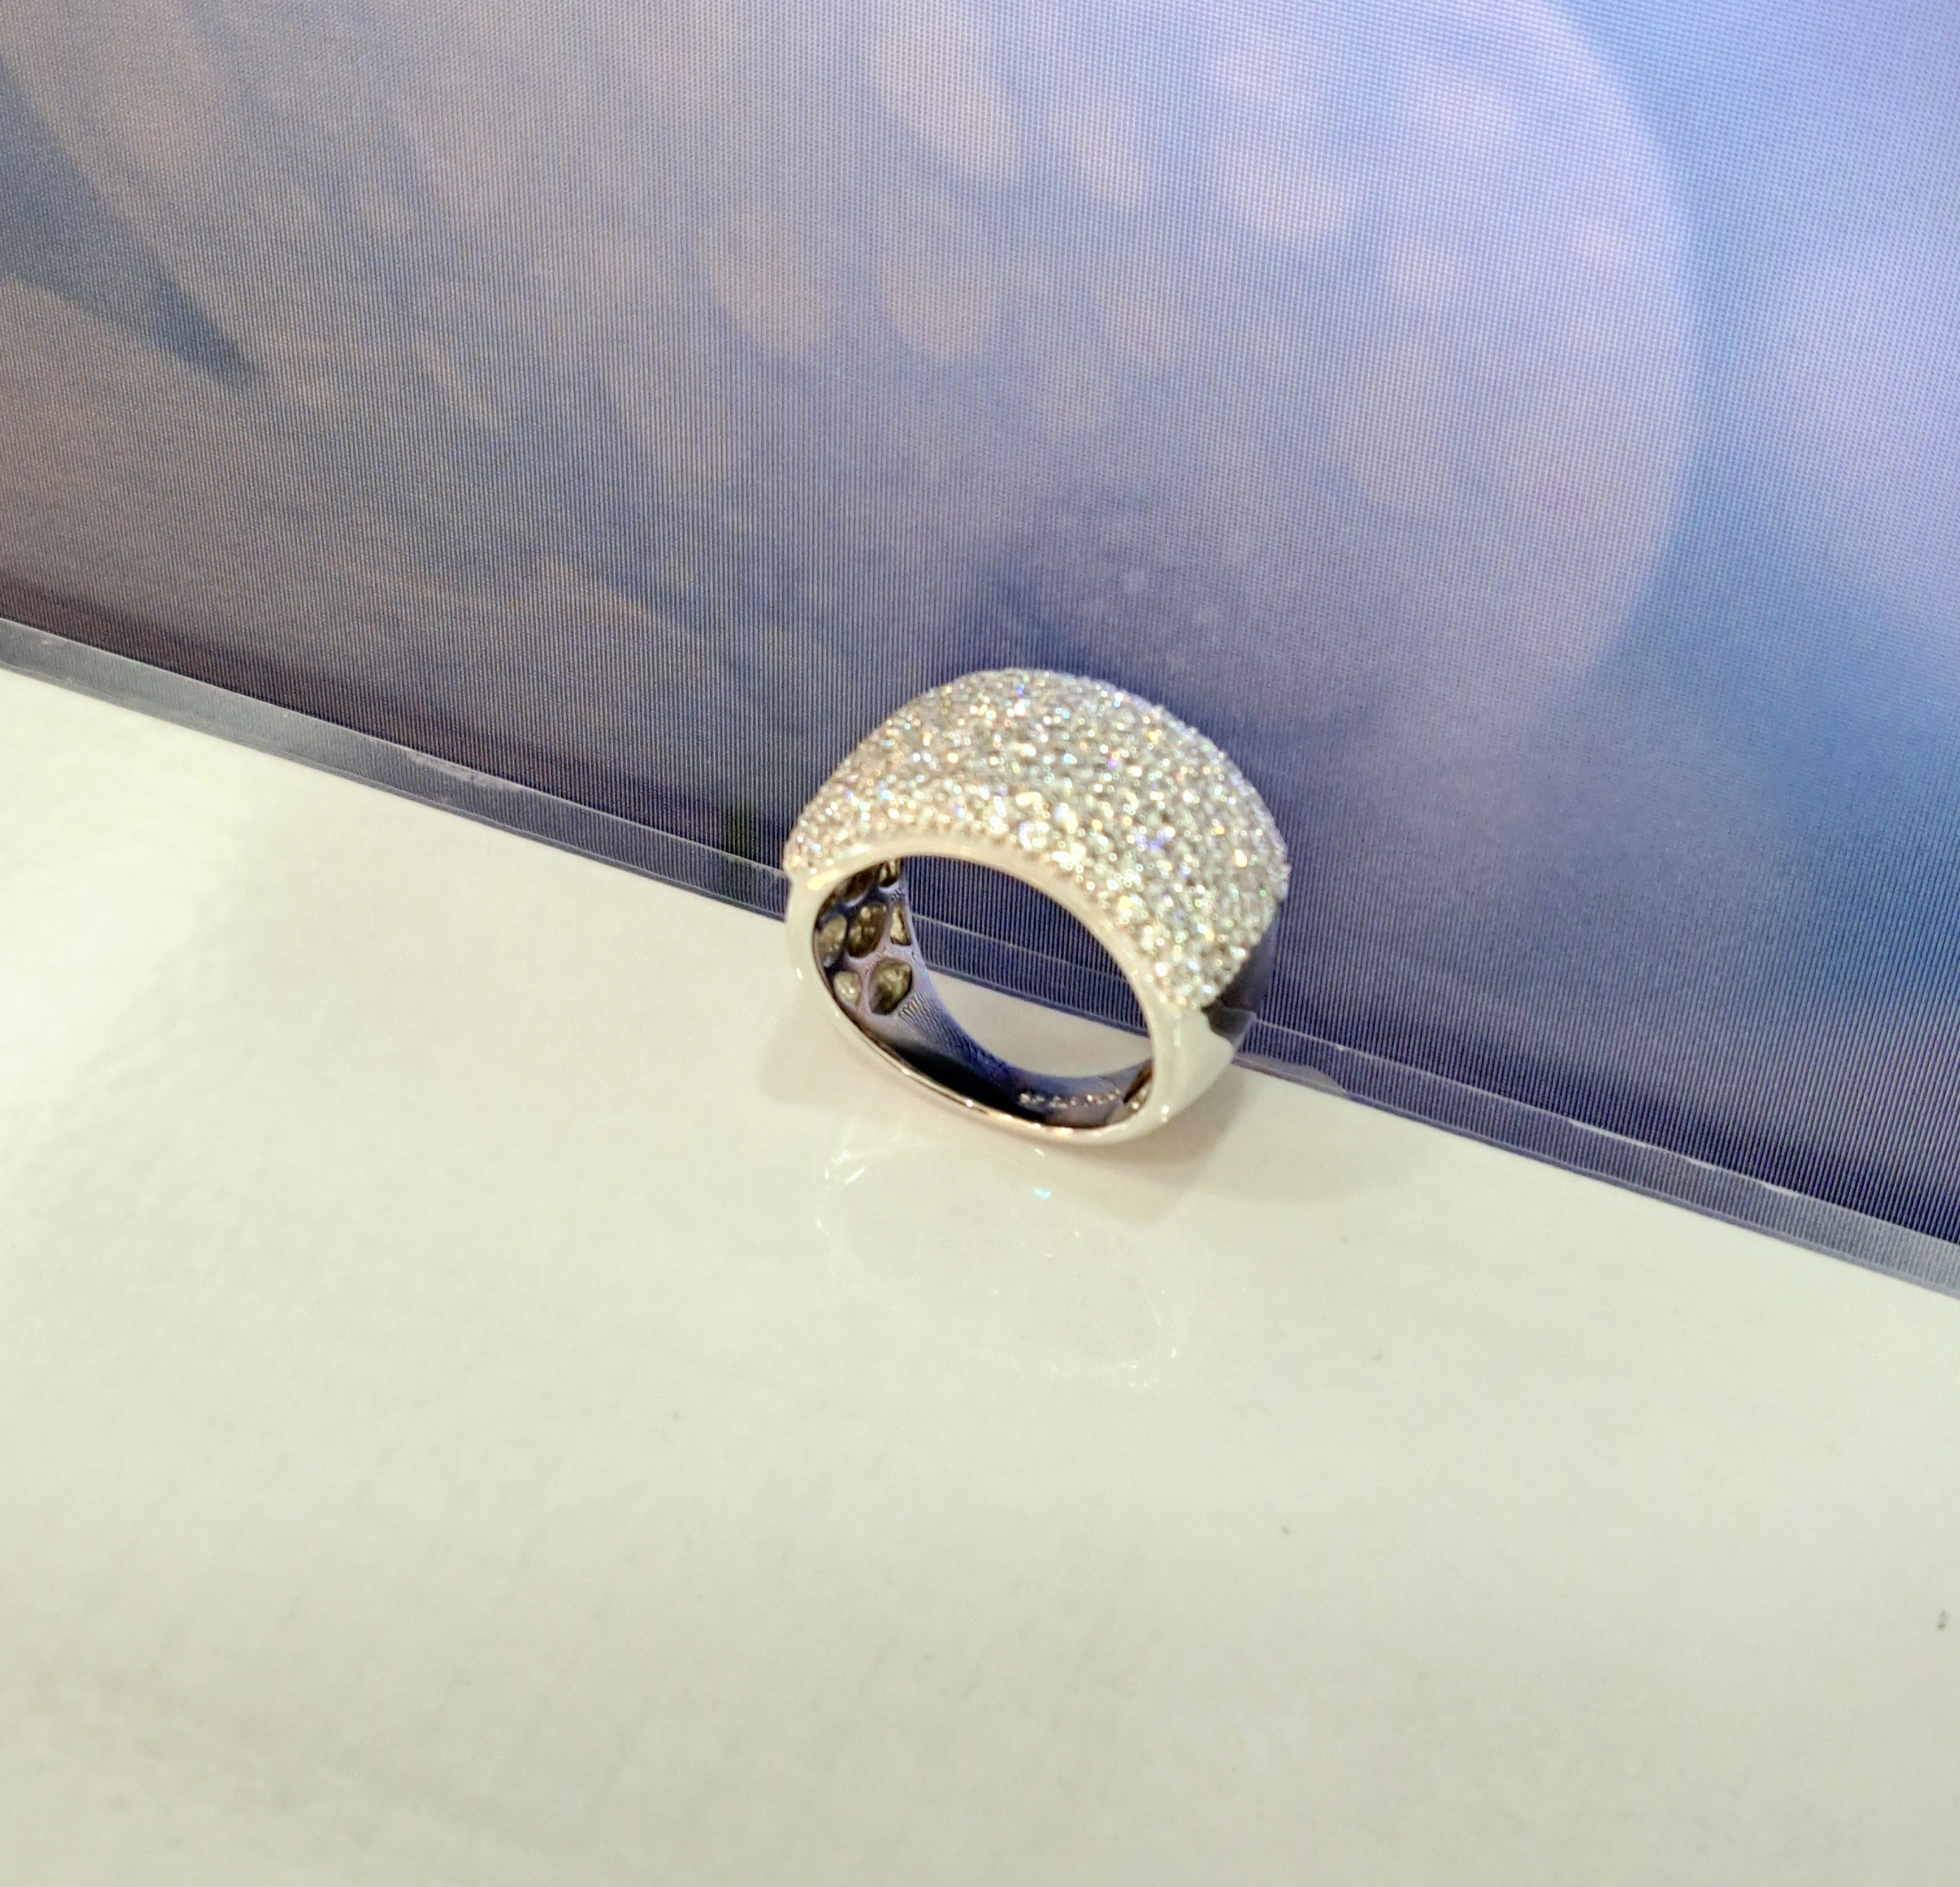 Stunning Micro Pave Ring